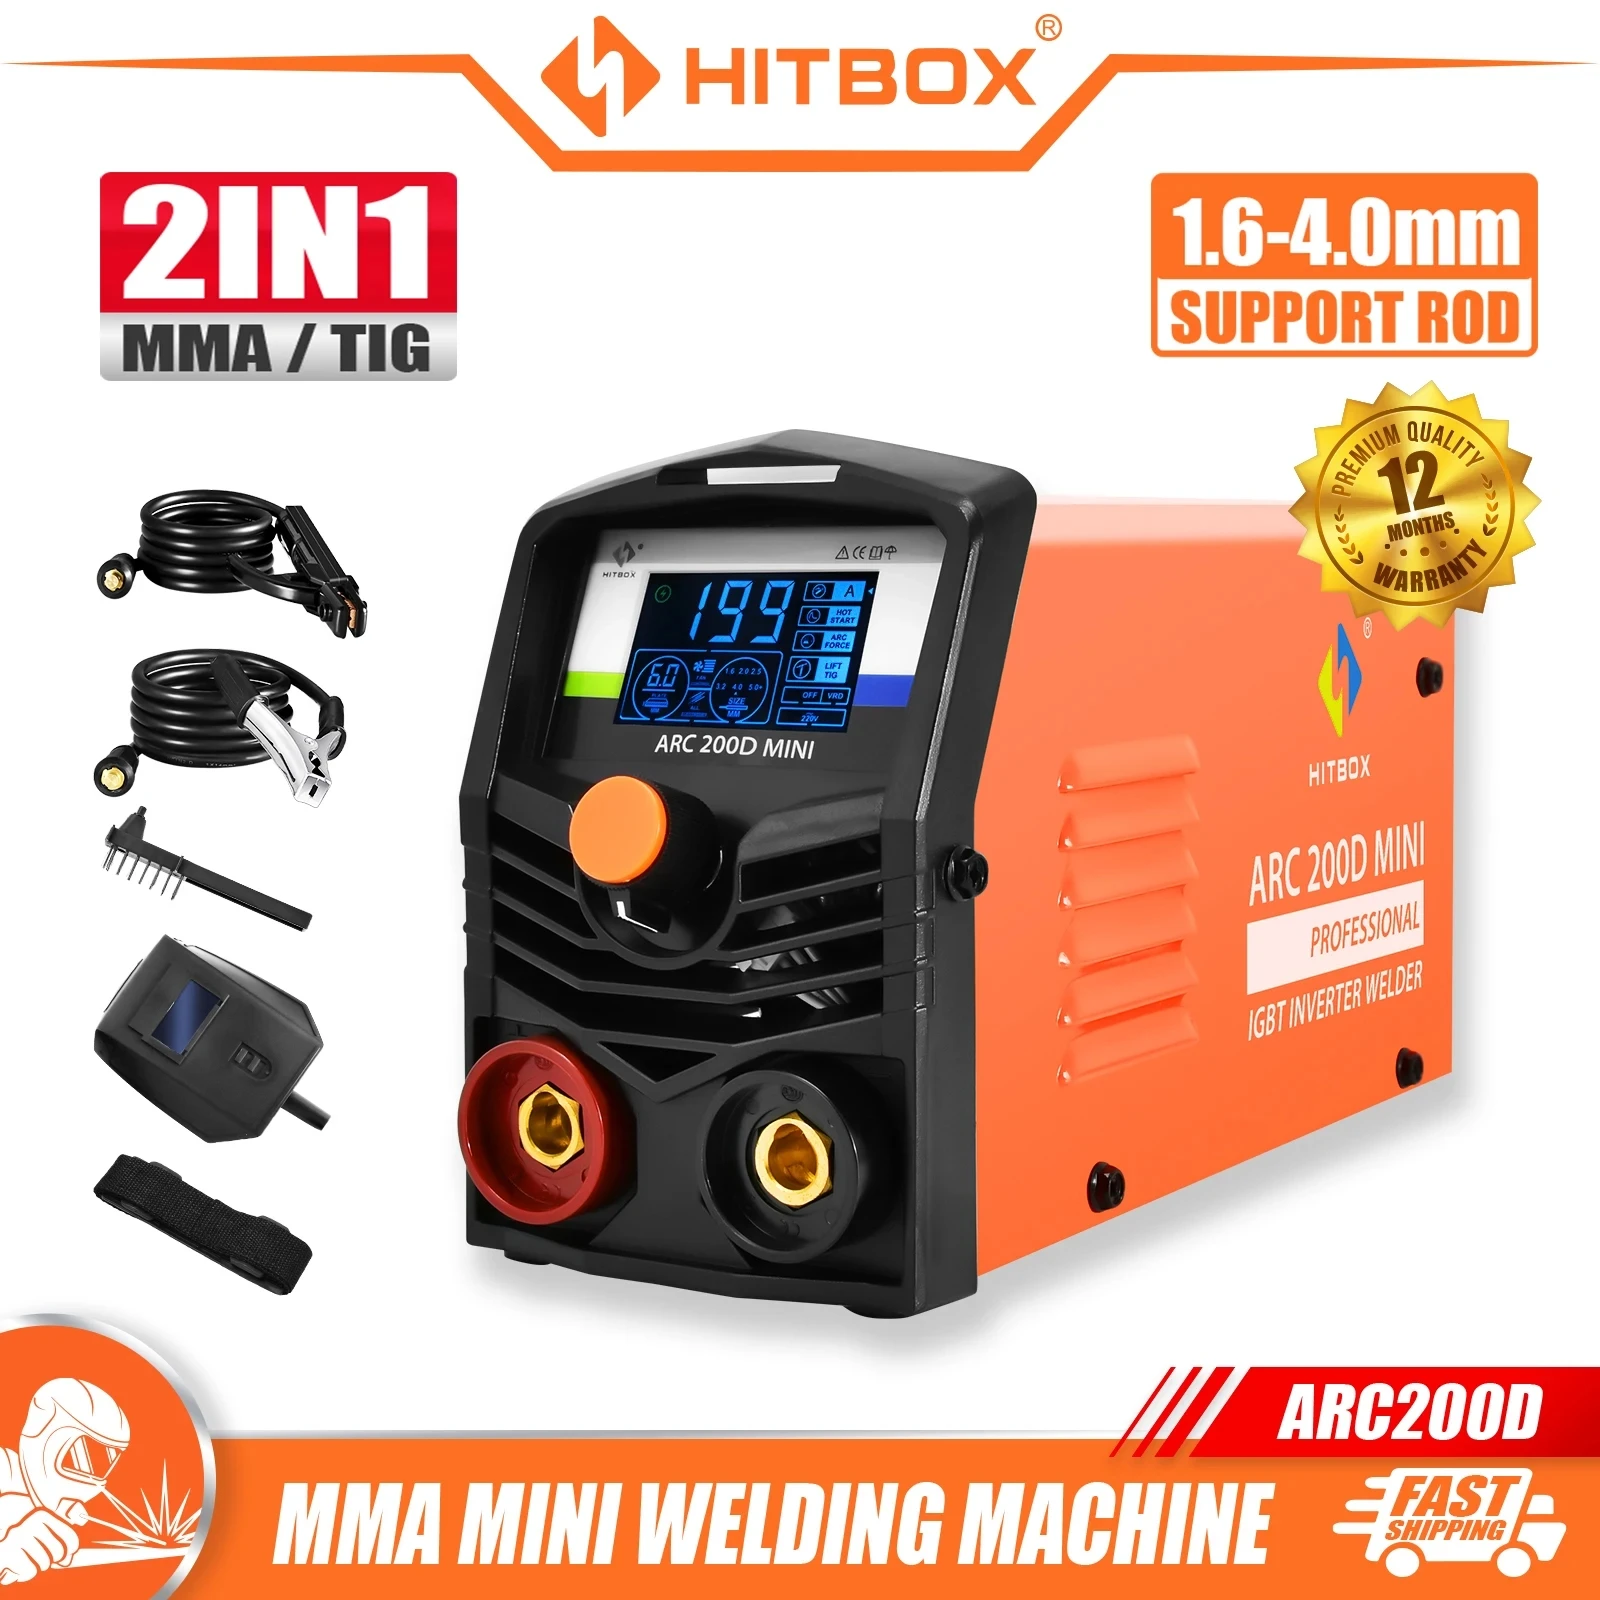 

HITBOX ARC200D Welding Machine 2 in 1 ARC MMA LIFT TIG MINI IGBT Inverter LED Digital Display Protable Home Welder 220V 10-200A